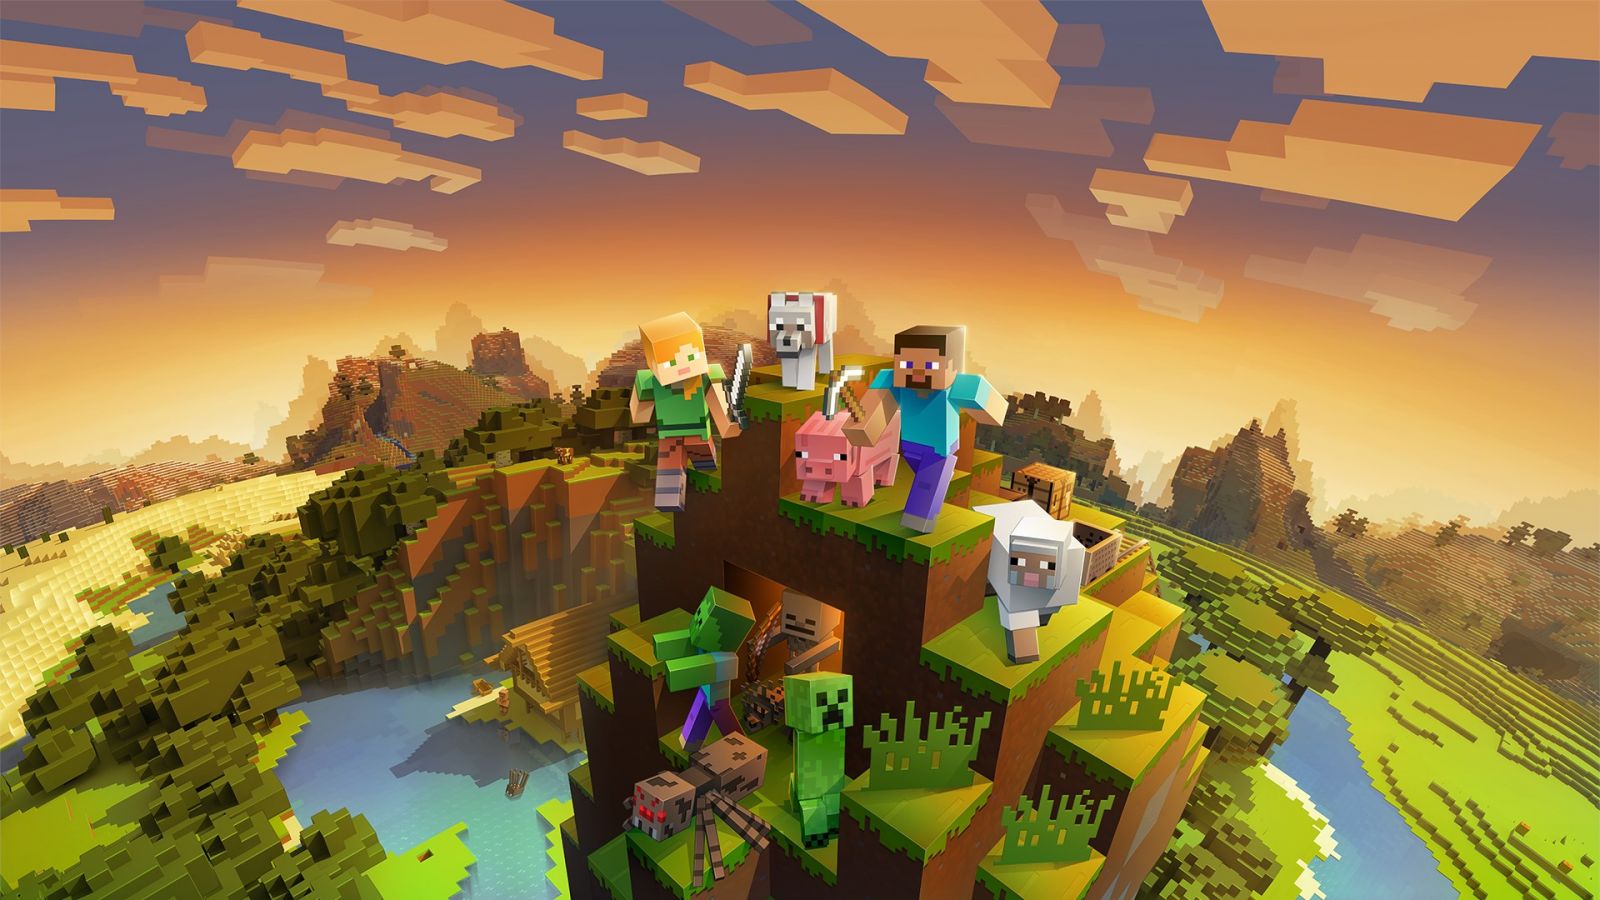 Download Game Minecraft 1.17.1 Full Crac'k